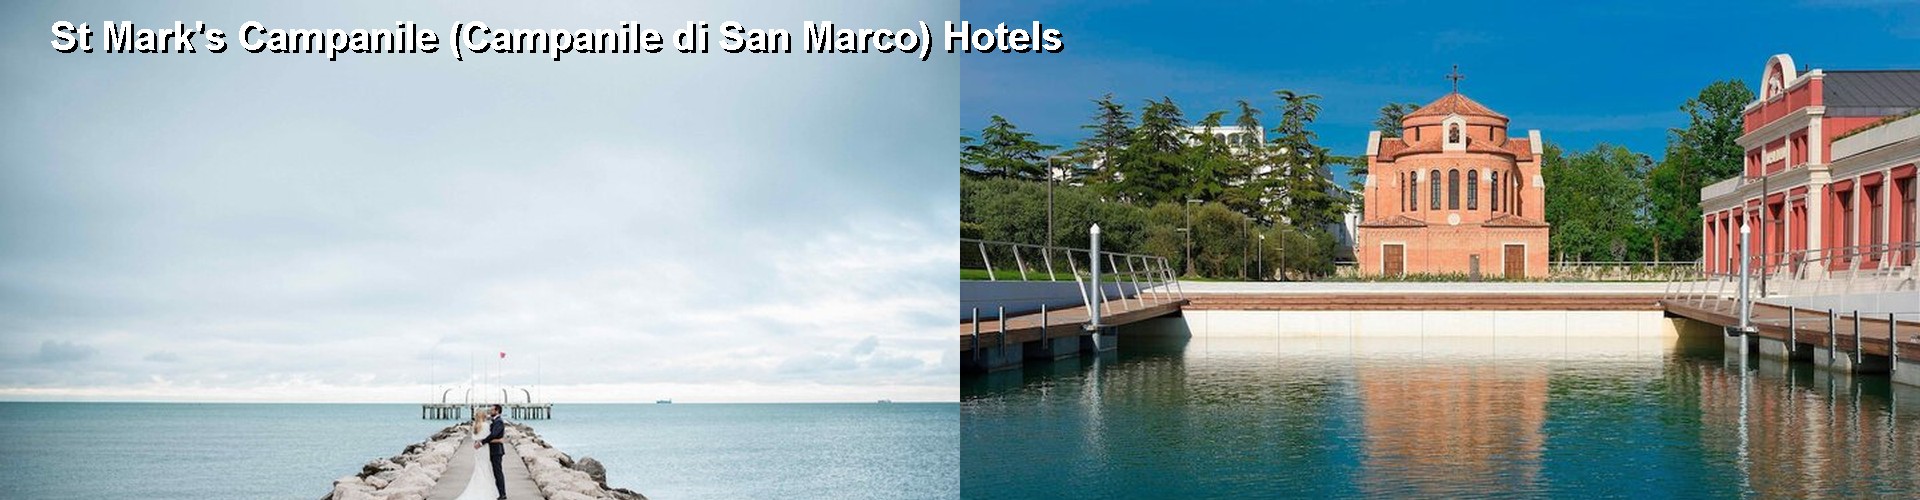 5 Best Hotels near St Mark's Campanile (Campanile di San Marco)